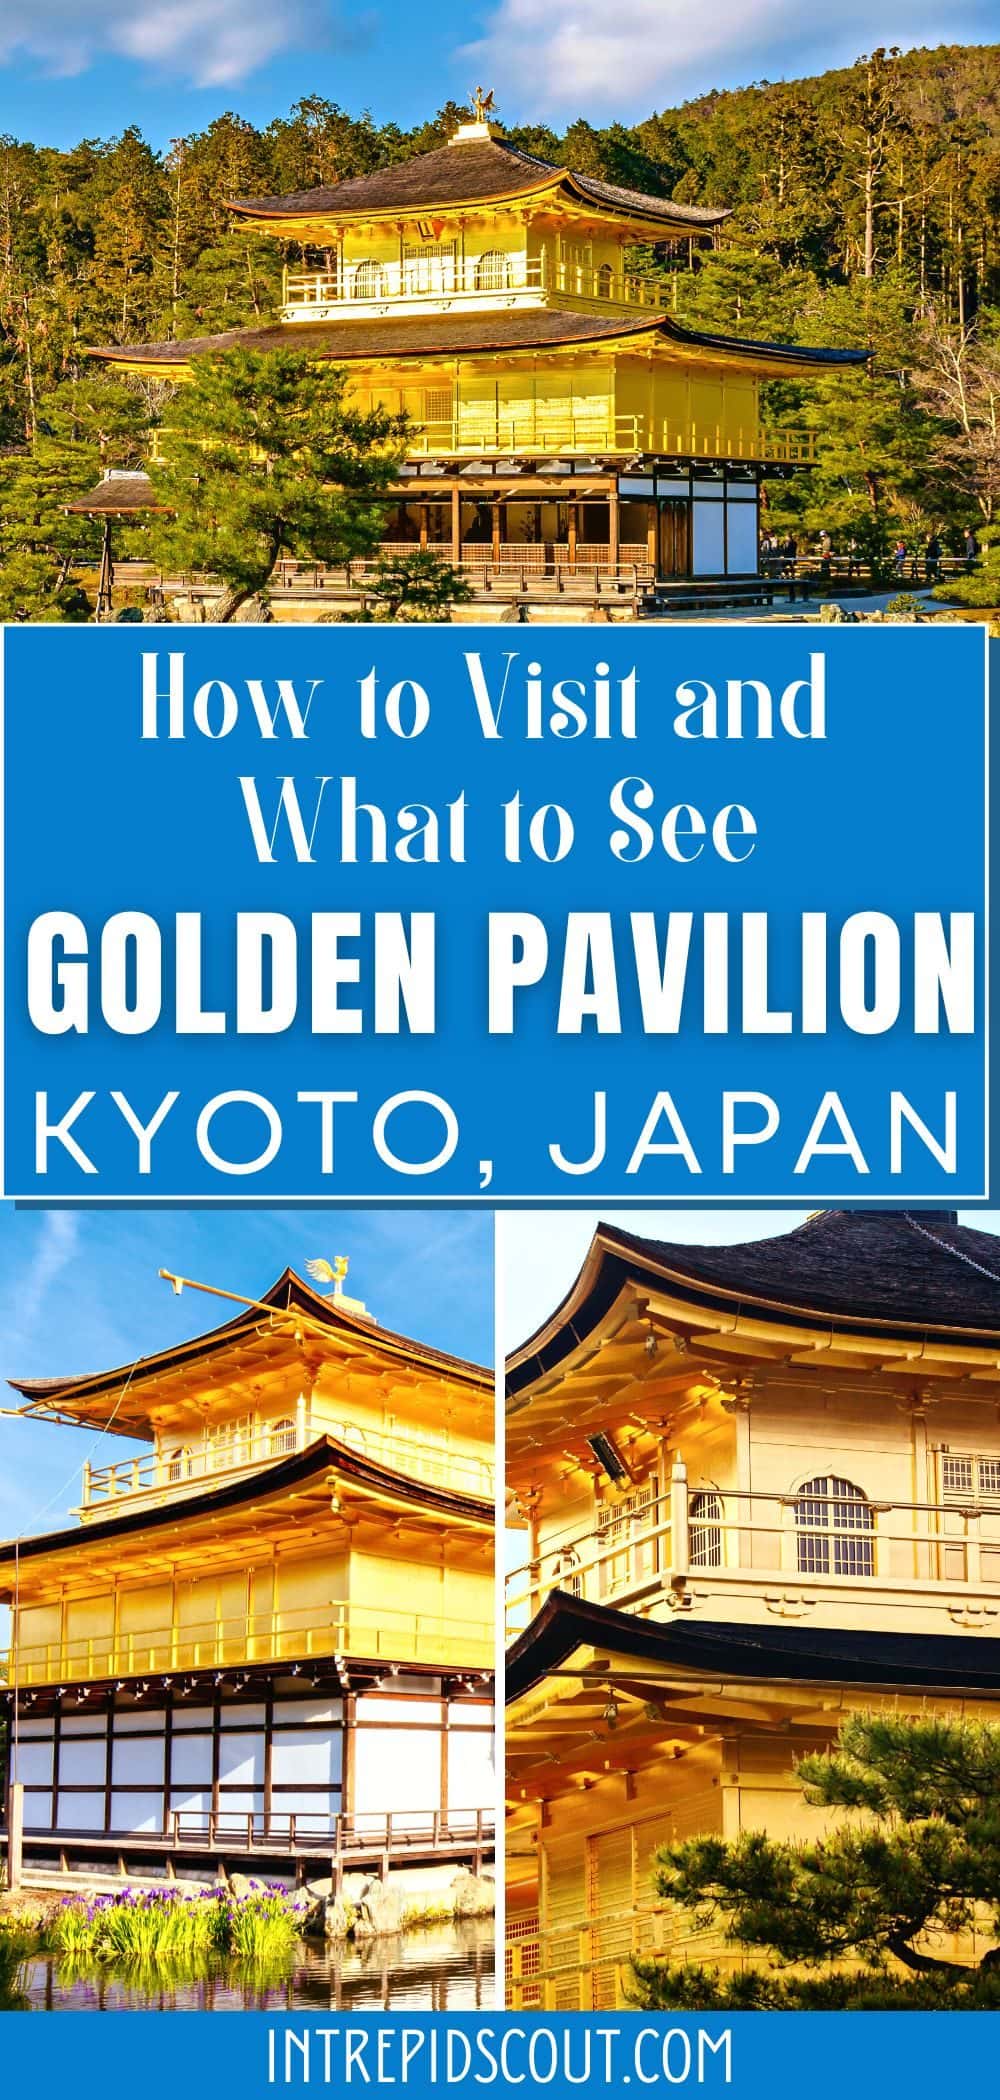 Golden Pavilion in Kyoto